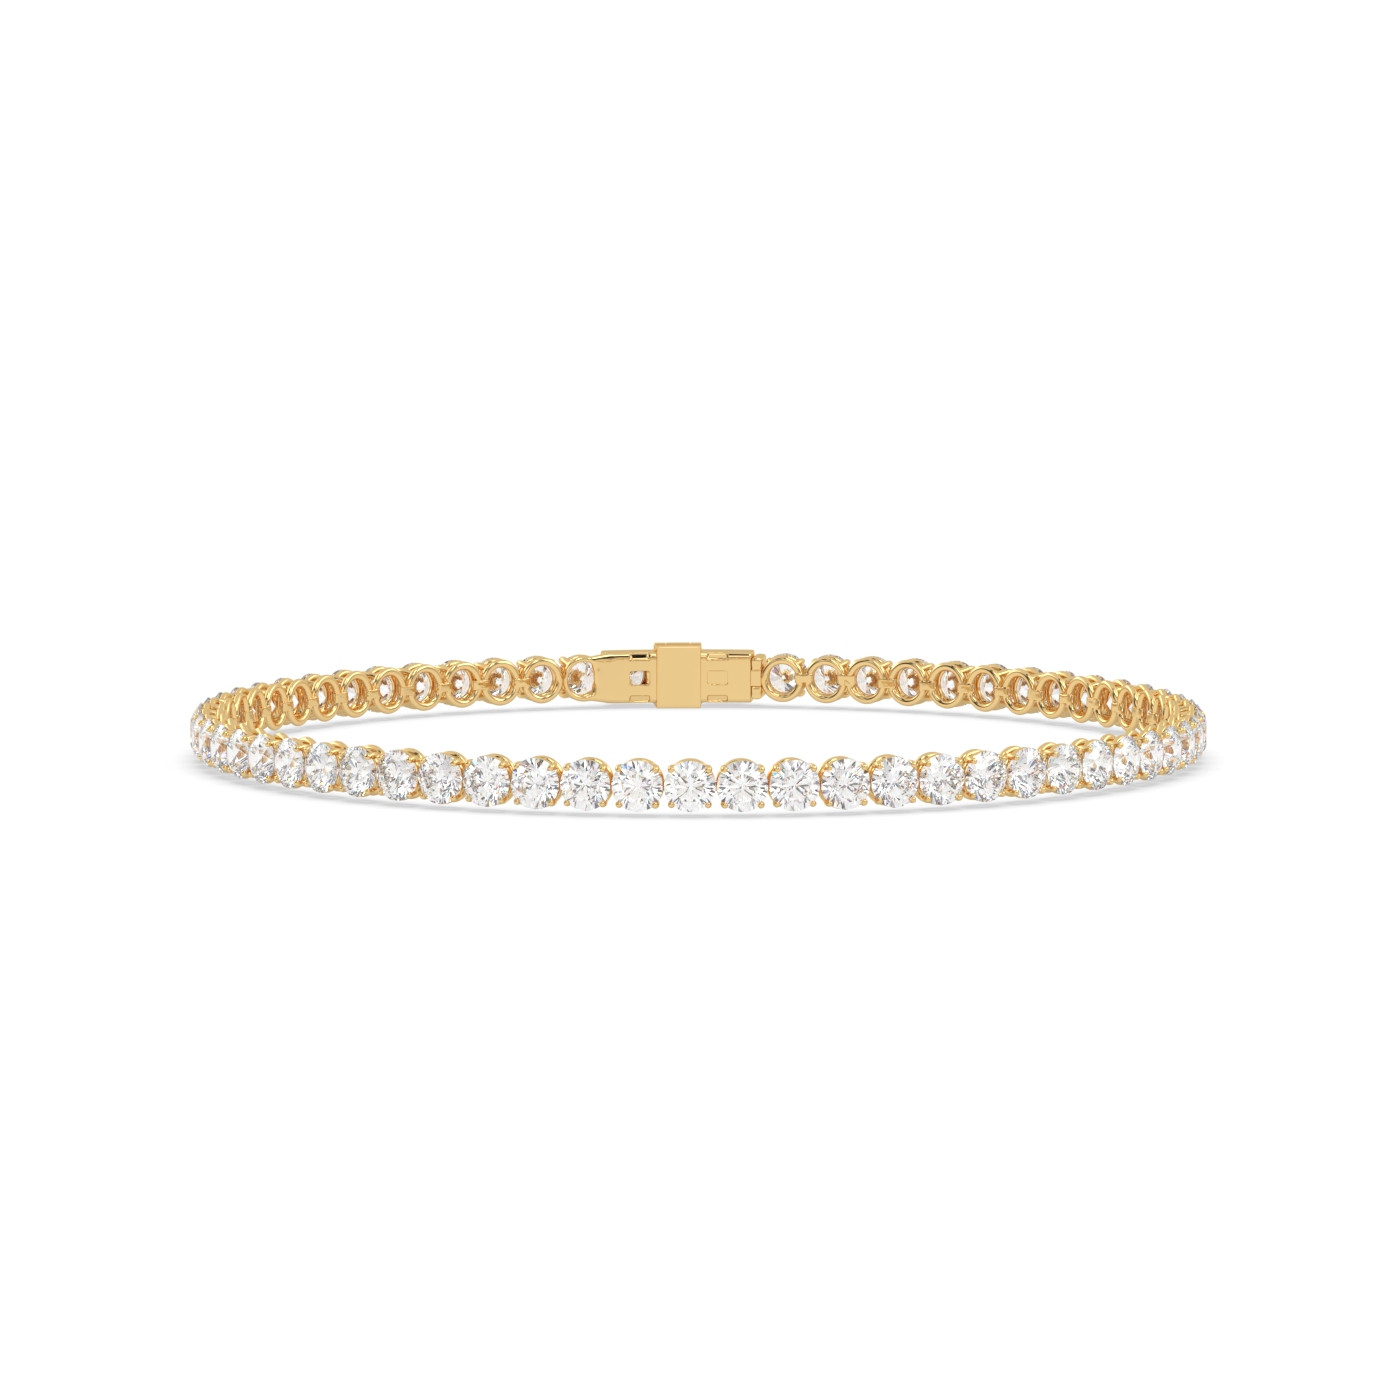 18k yellow gold 4.0 carat round diamond tennis bracelet with modern american lock system Photos & images